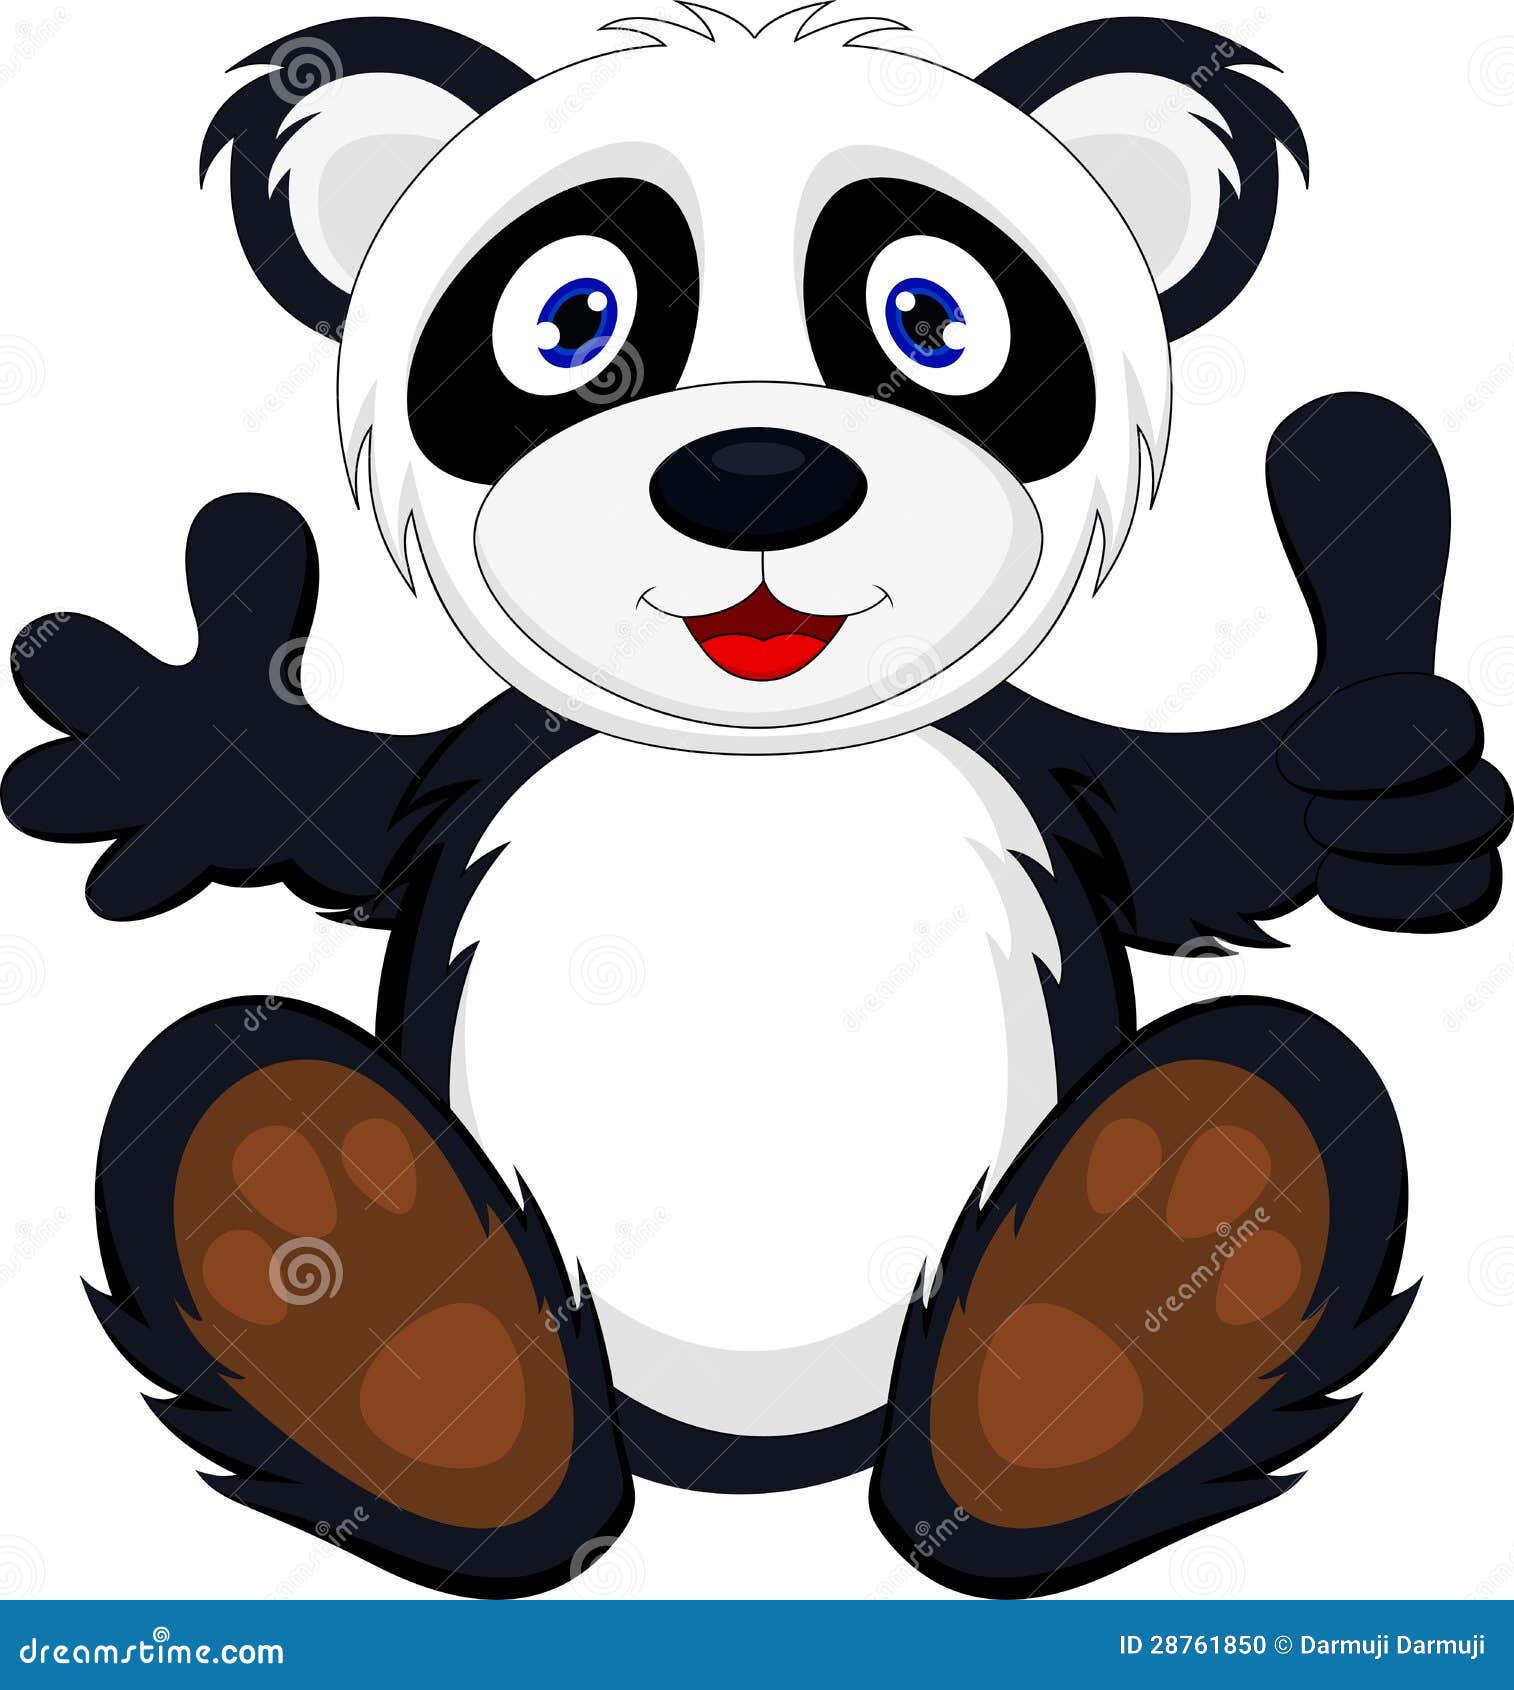 clipart panda thumbs up - photo #19